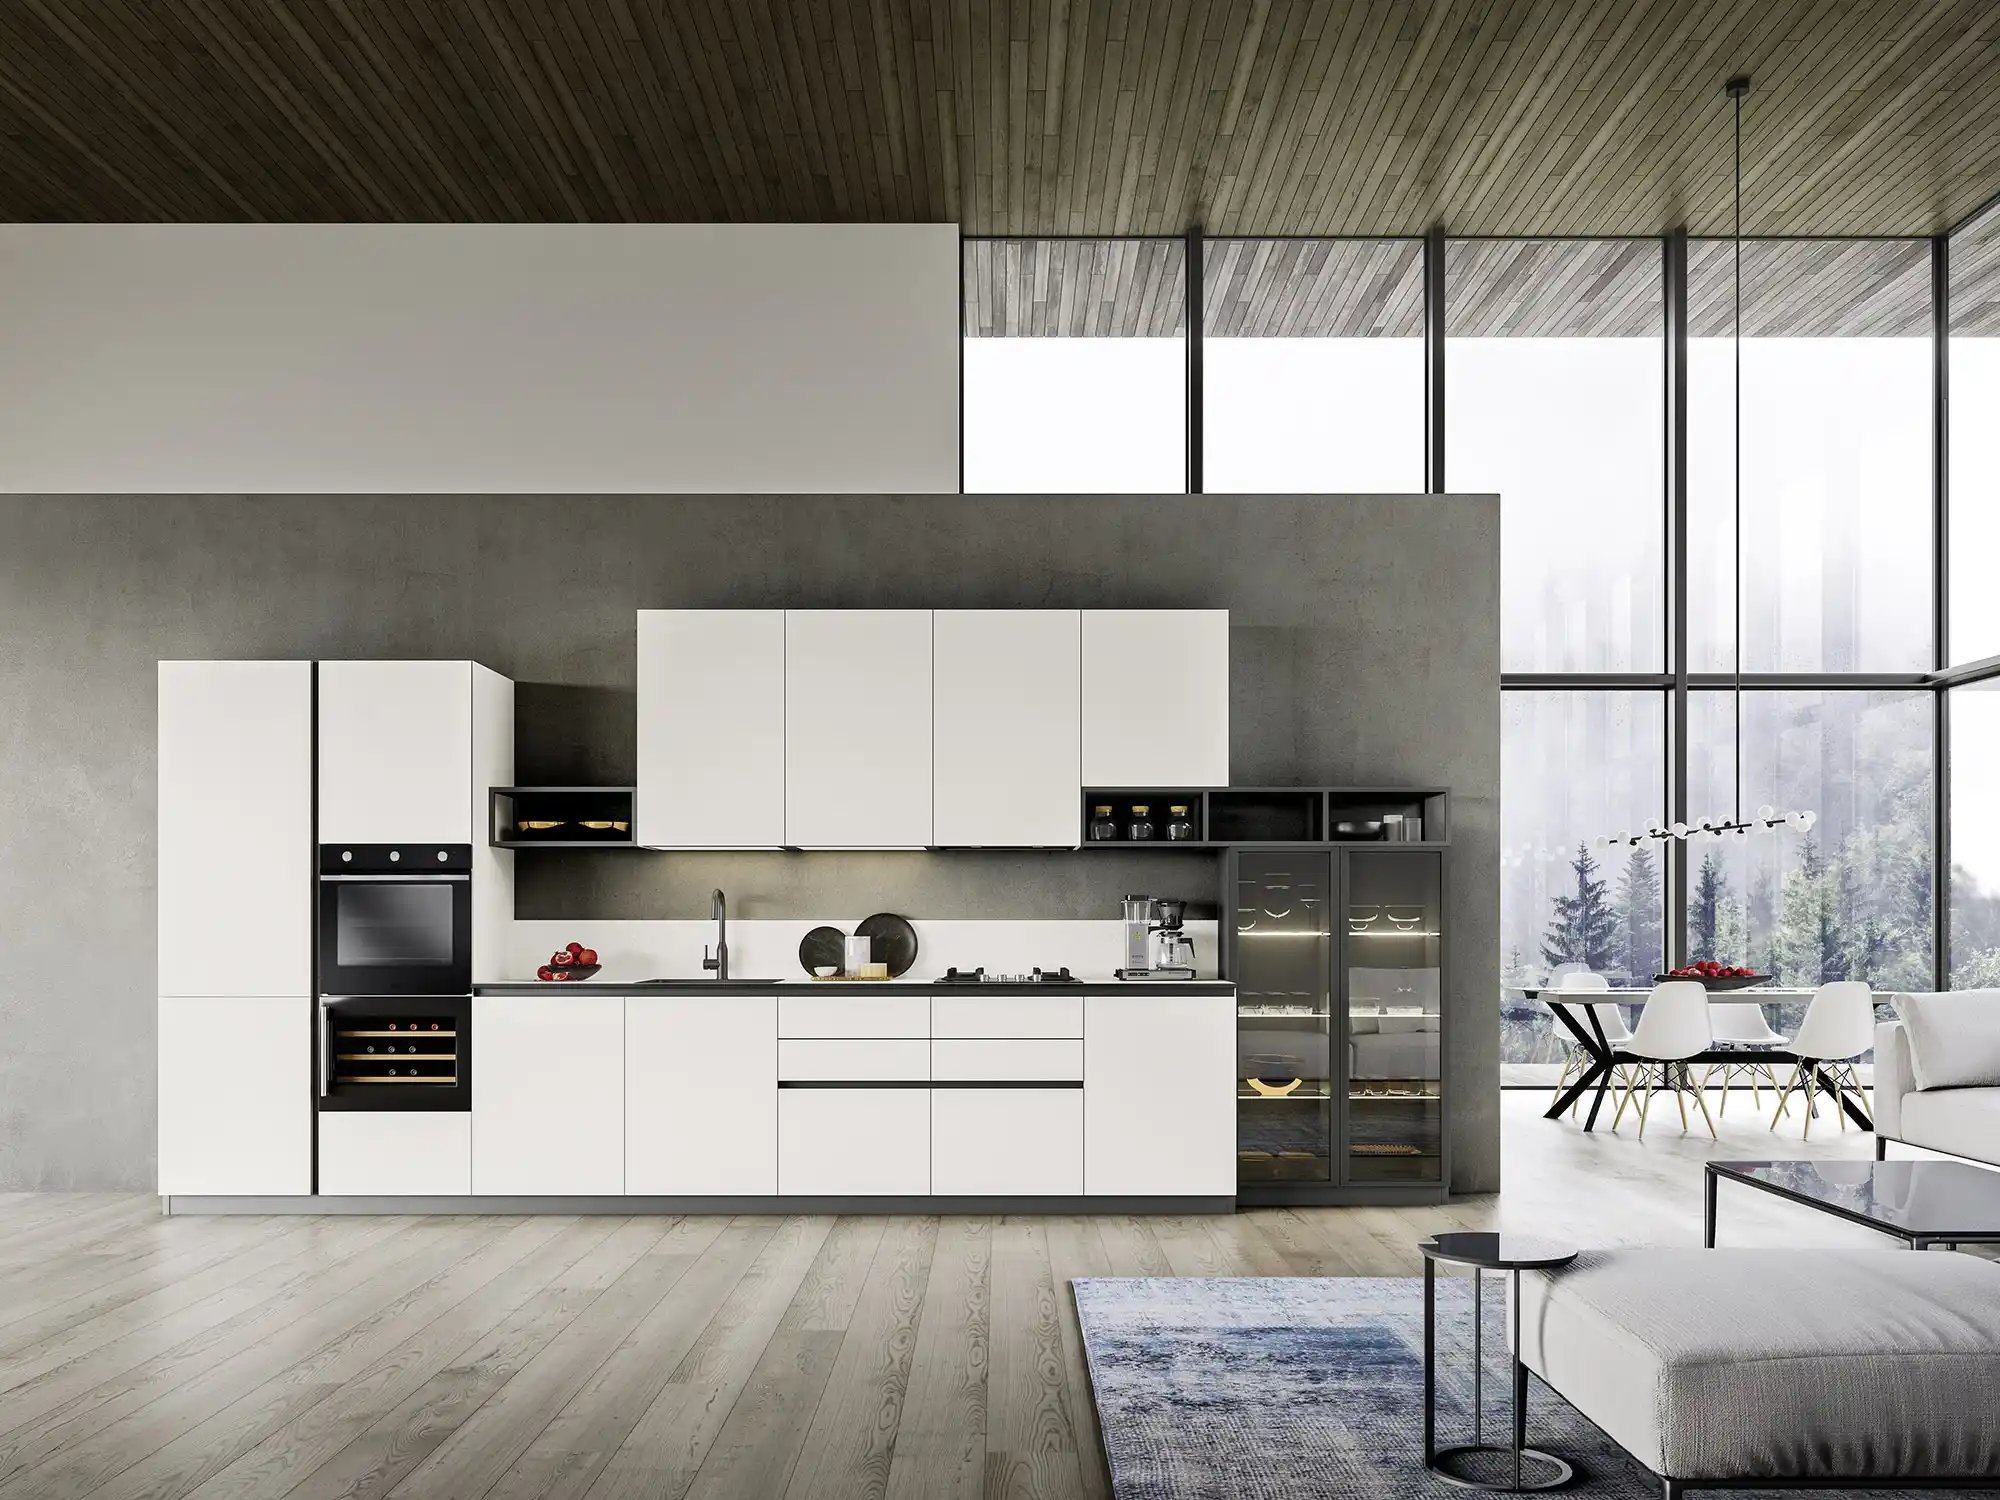 Custom Italian kitchen with personalized cabinets designed by LAVISH.